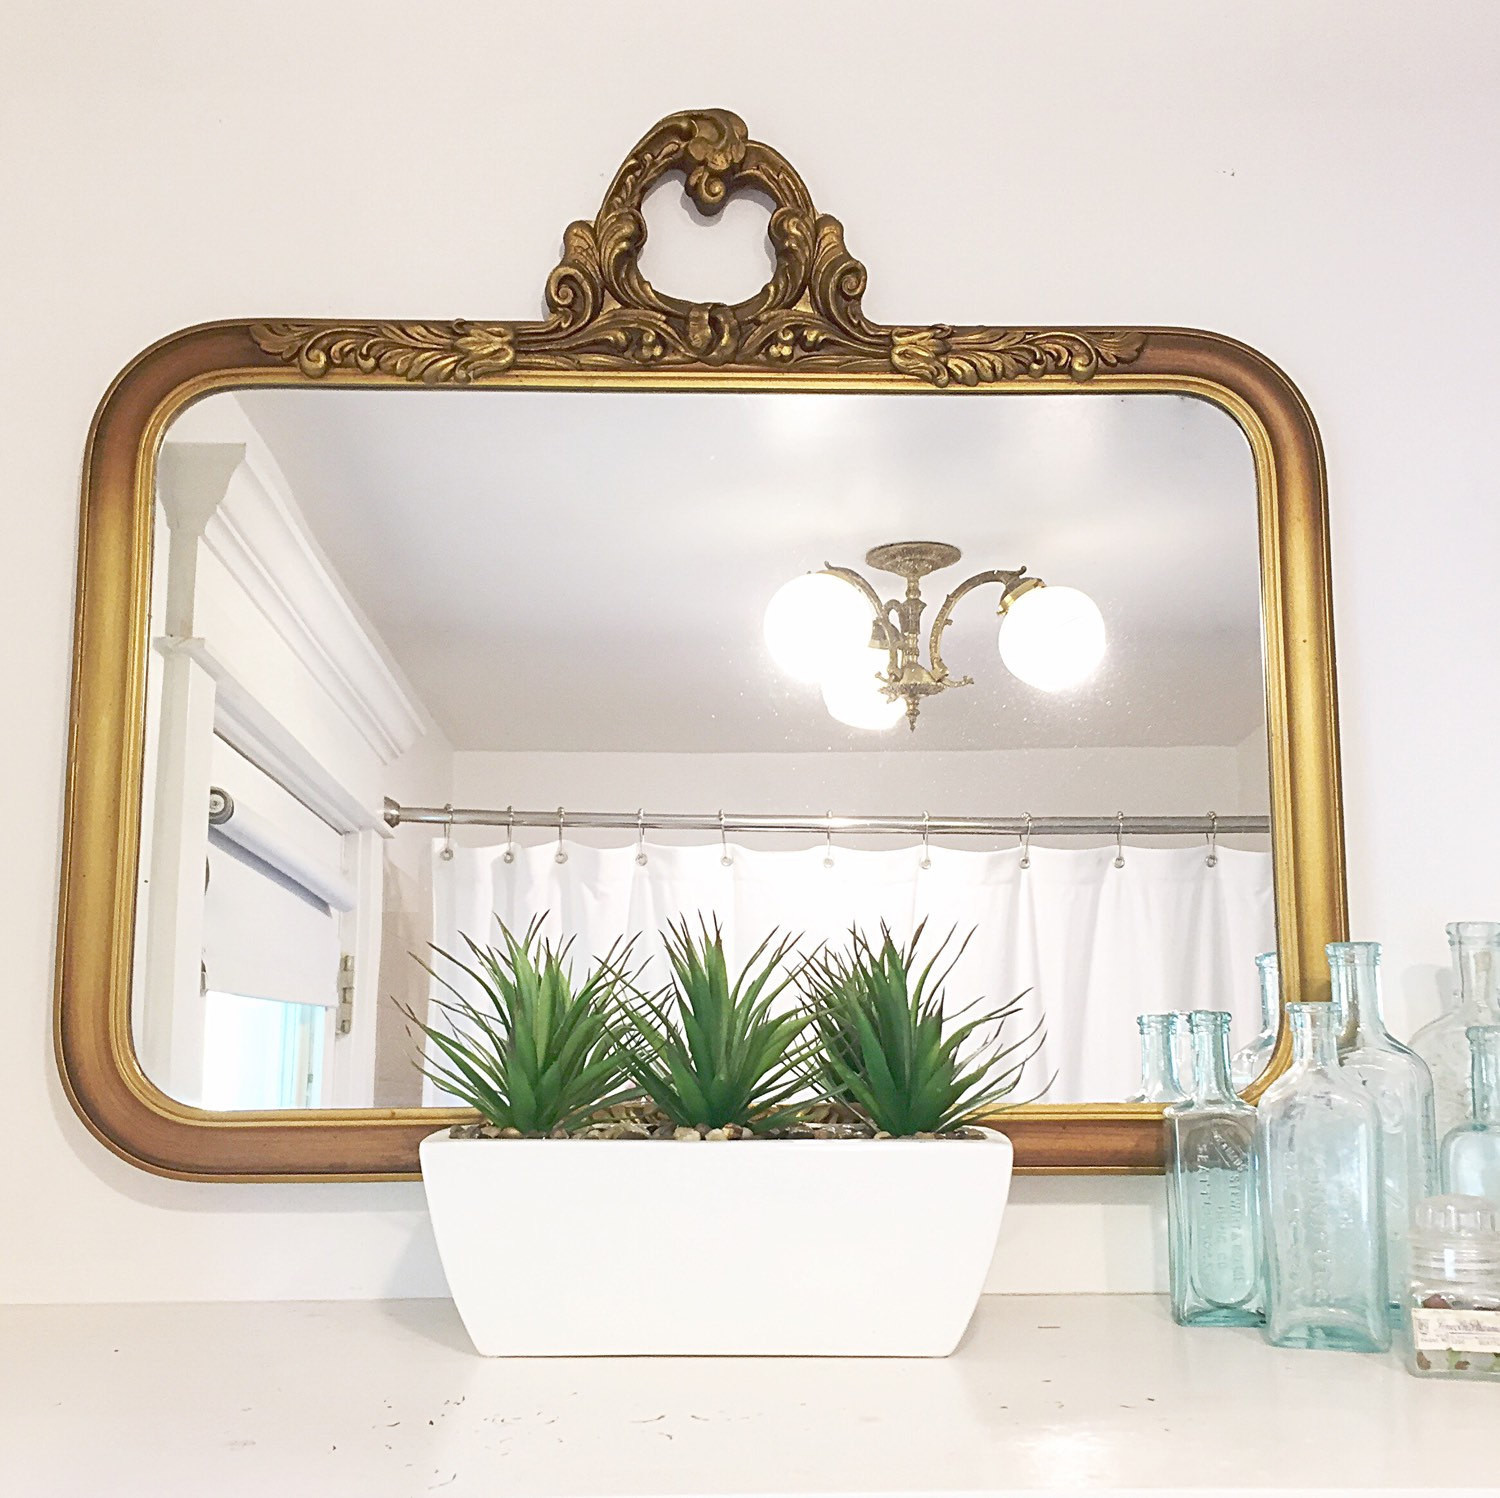 Gold Frame Bathroom Mirror
 Antique Mirror Gold Gilt Frame Bathroom Mirror Ornate Wood